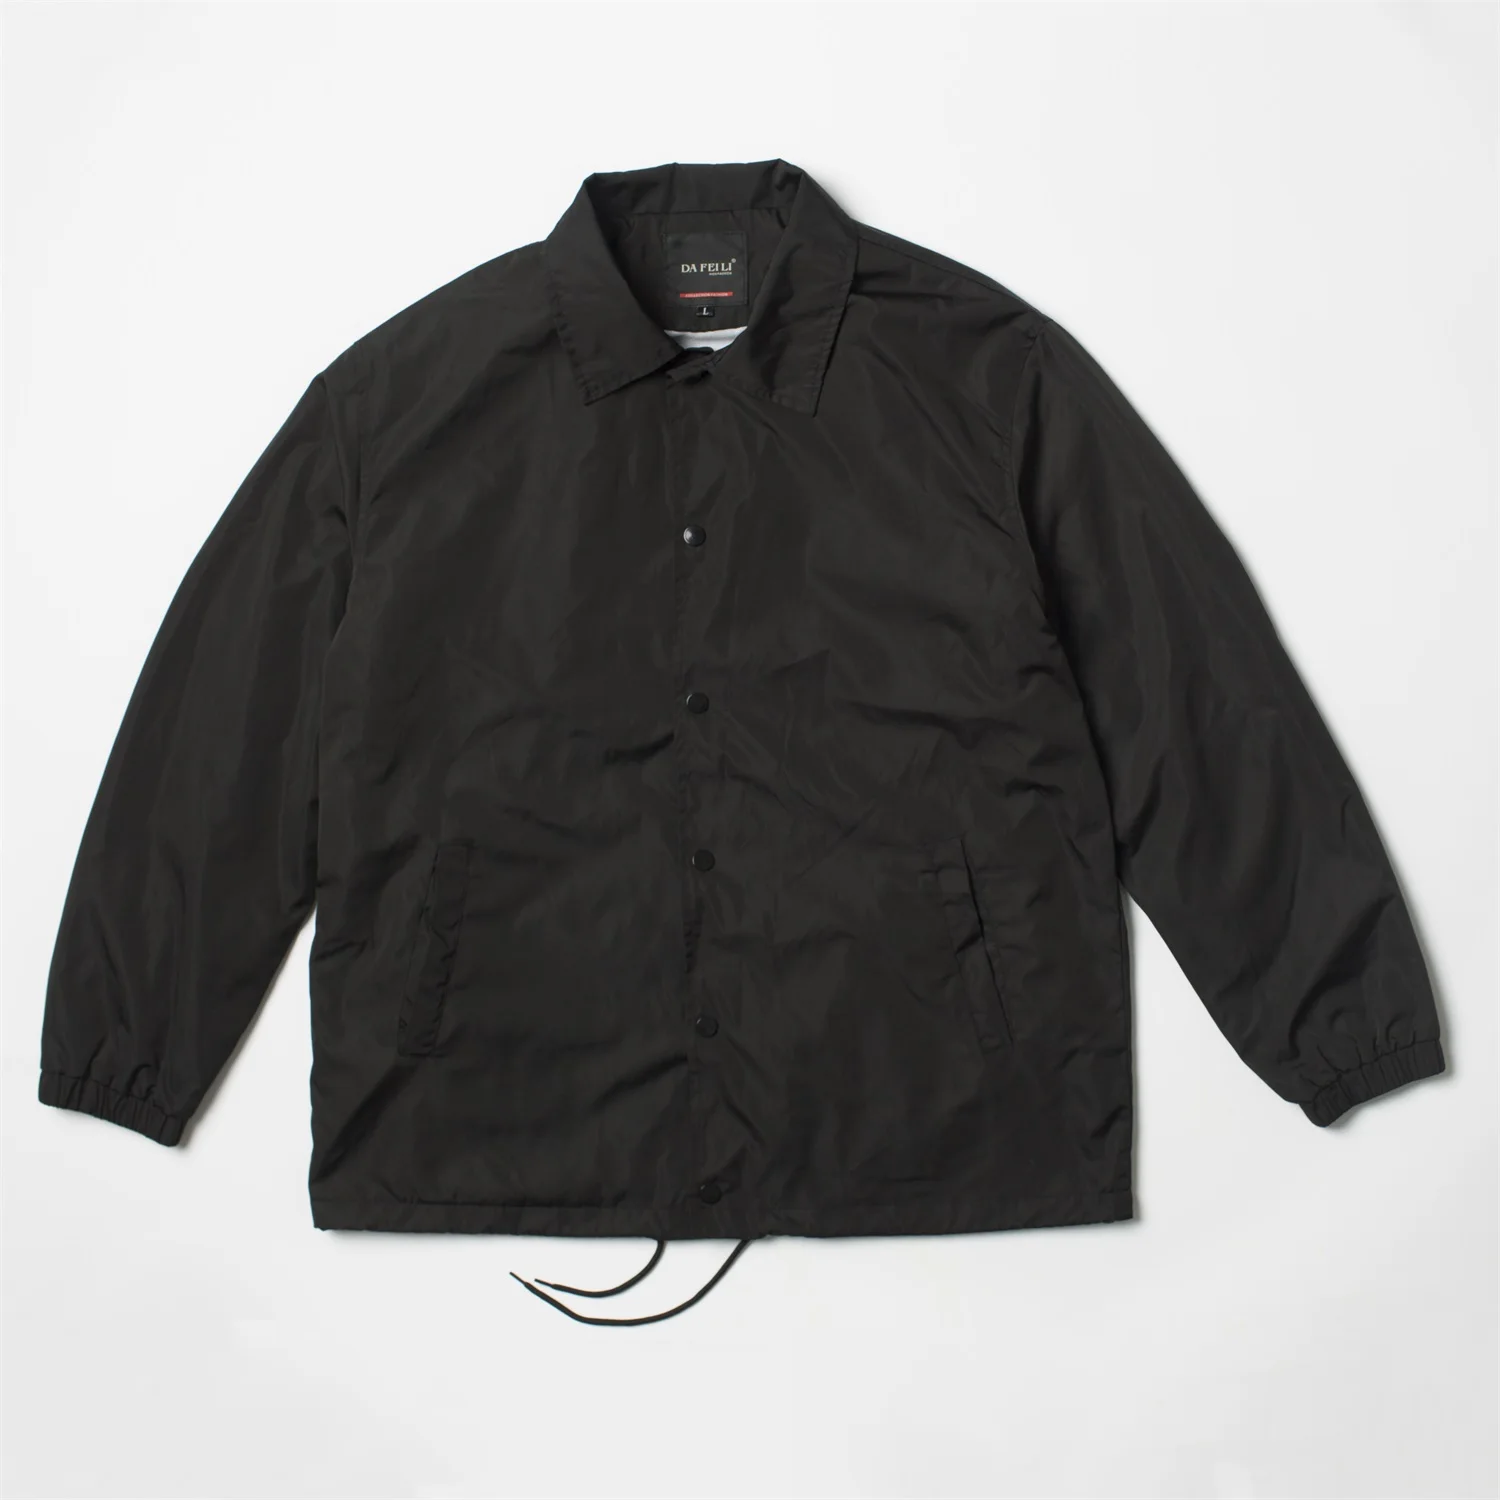 Wholesale Good Waterproof Blank Coaches Jacket Plain Black - Buy ...